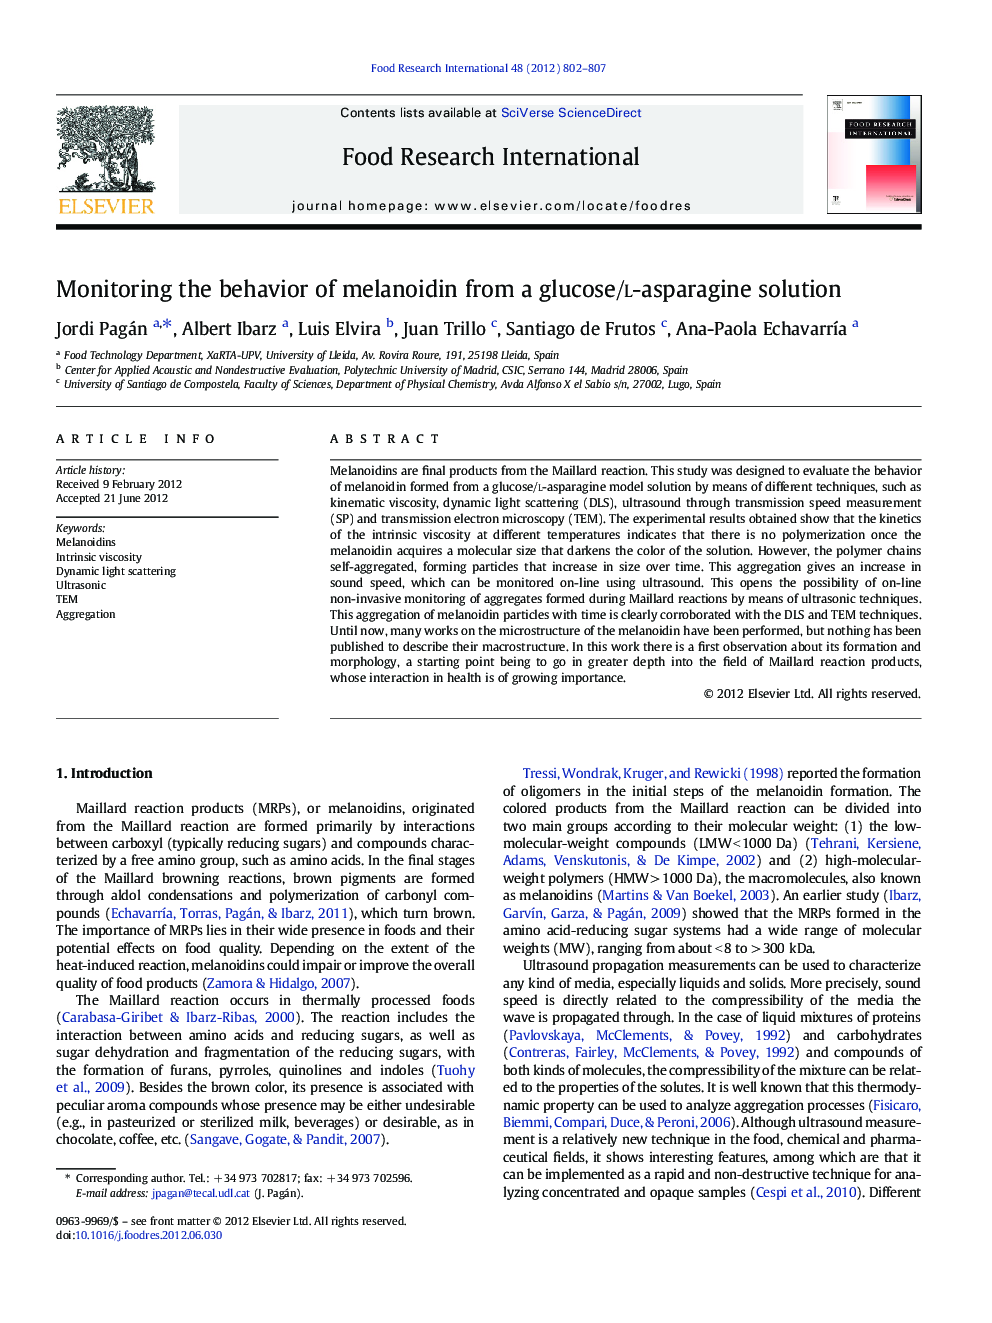 Monitoring the behavior of melanoidin from a glucose/l-asparagine solution